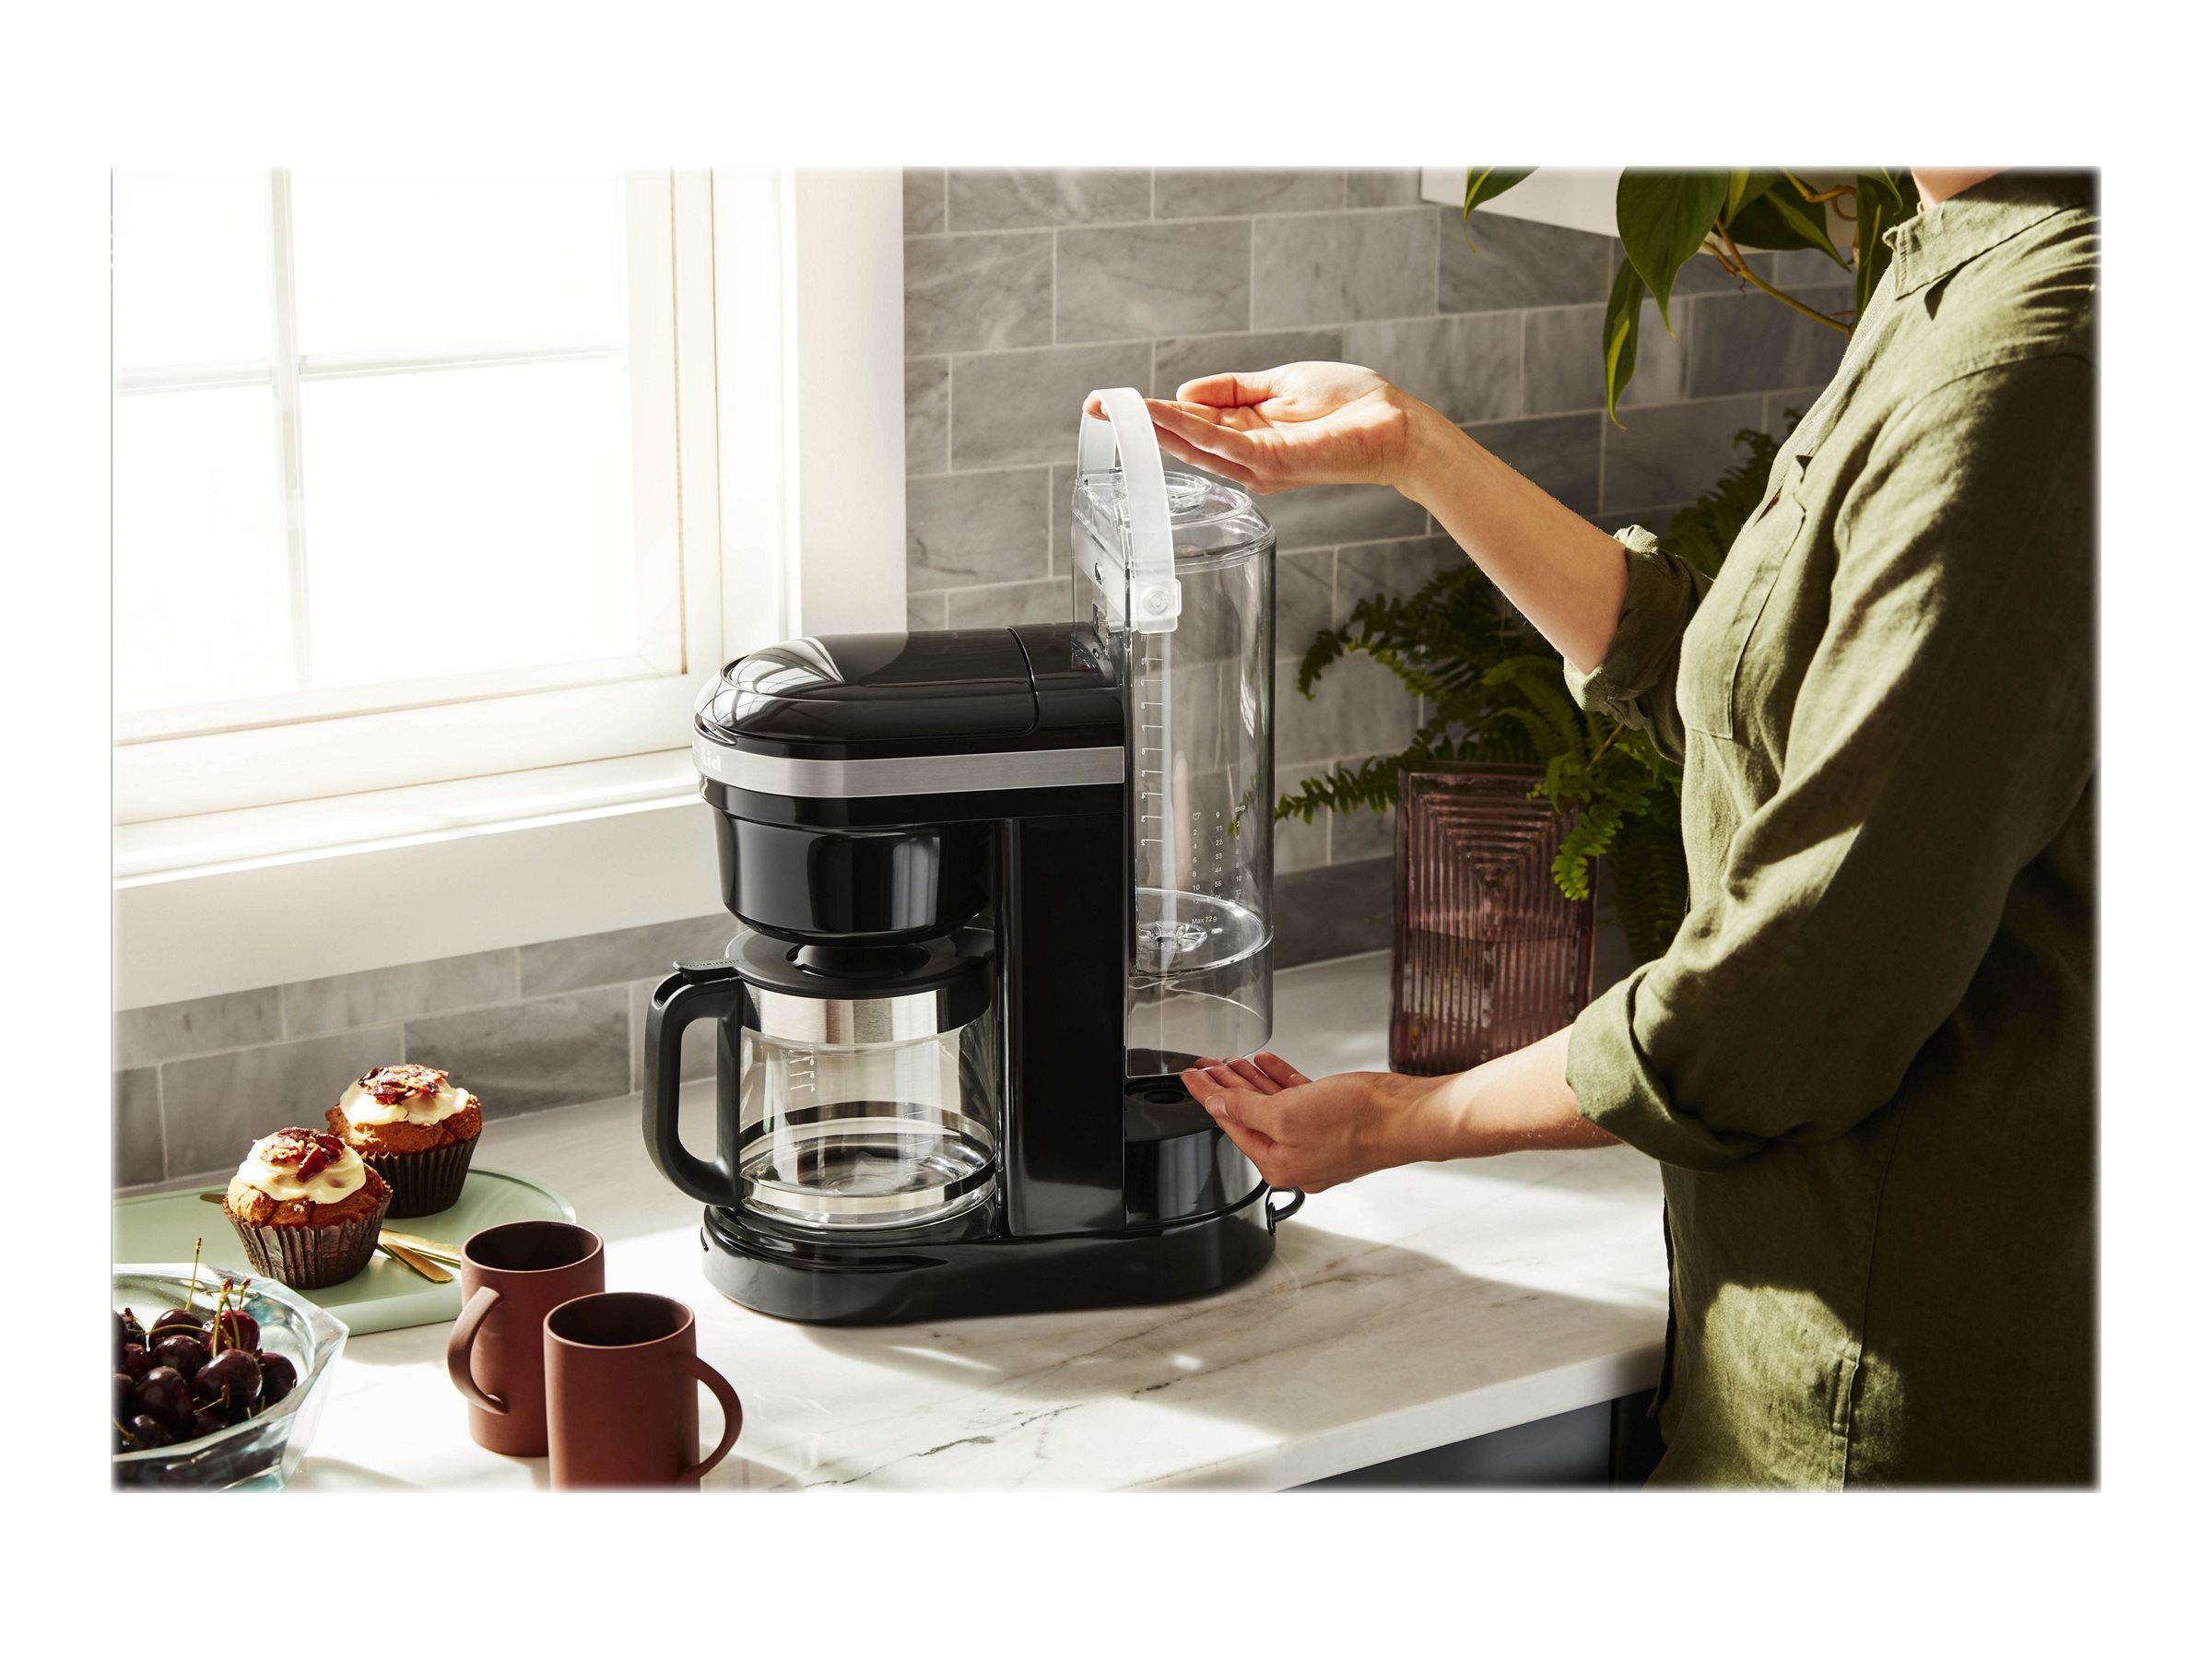 KitchenAid Coffee Maker 10 Cup KCM5250B-0 Black / Glass Pot Tested & Works